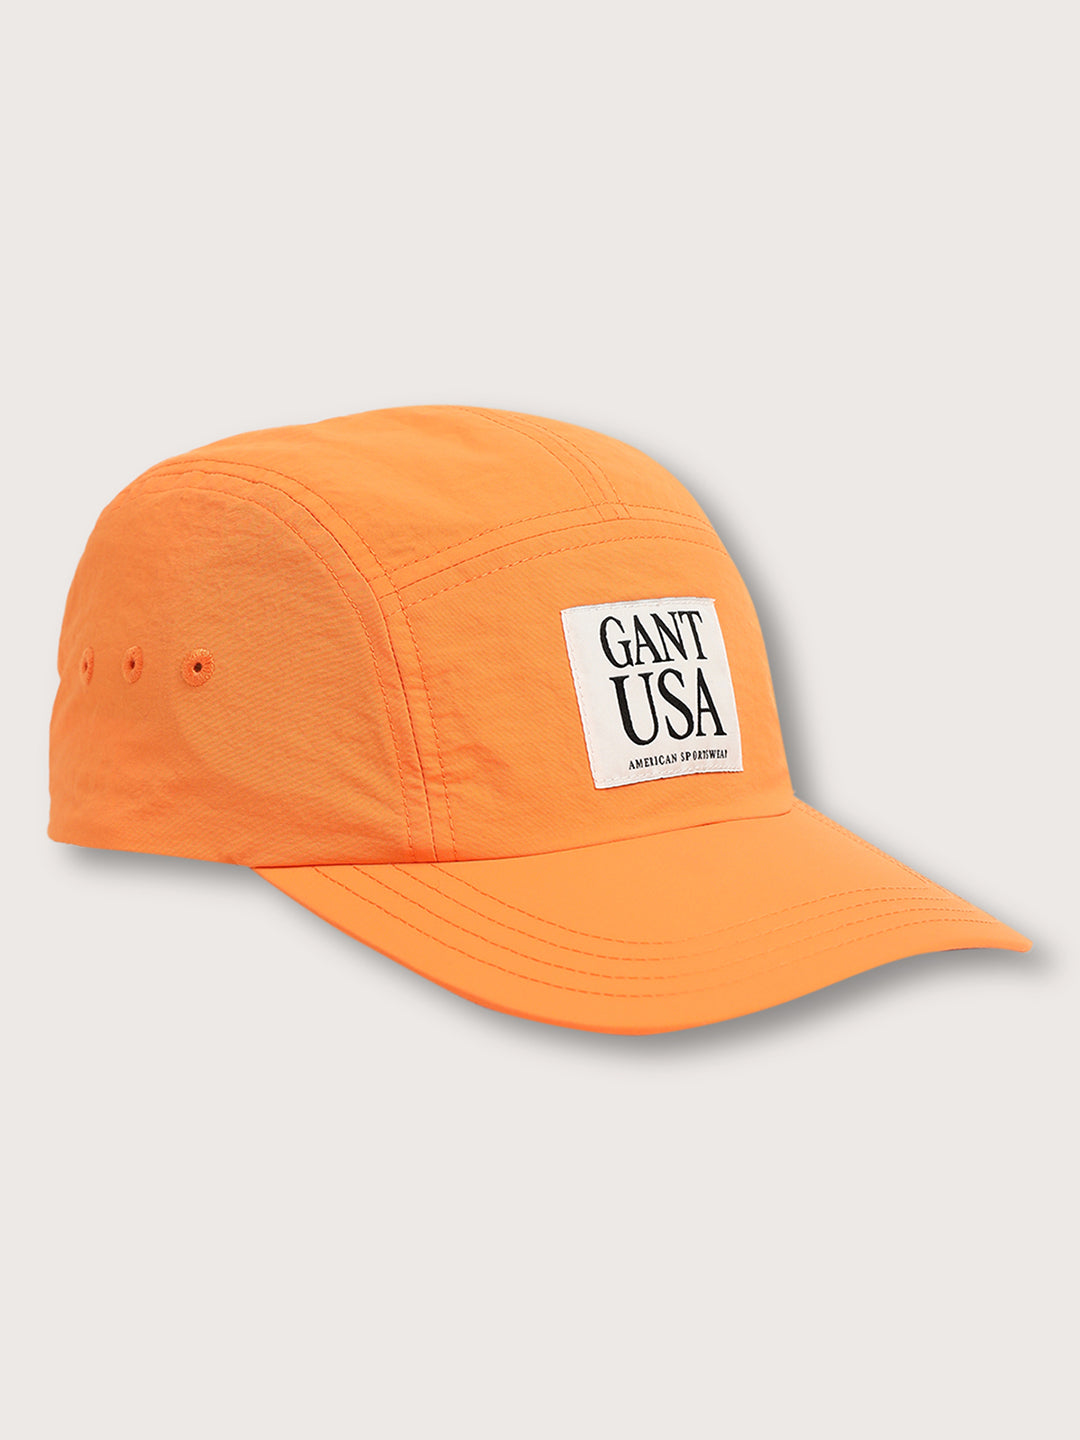 Shop Gant Men Orange Caps India INDIA | – Iconic ICONIC